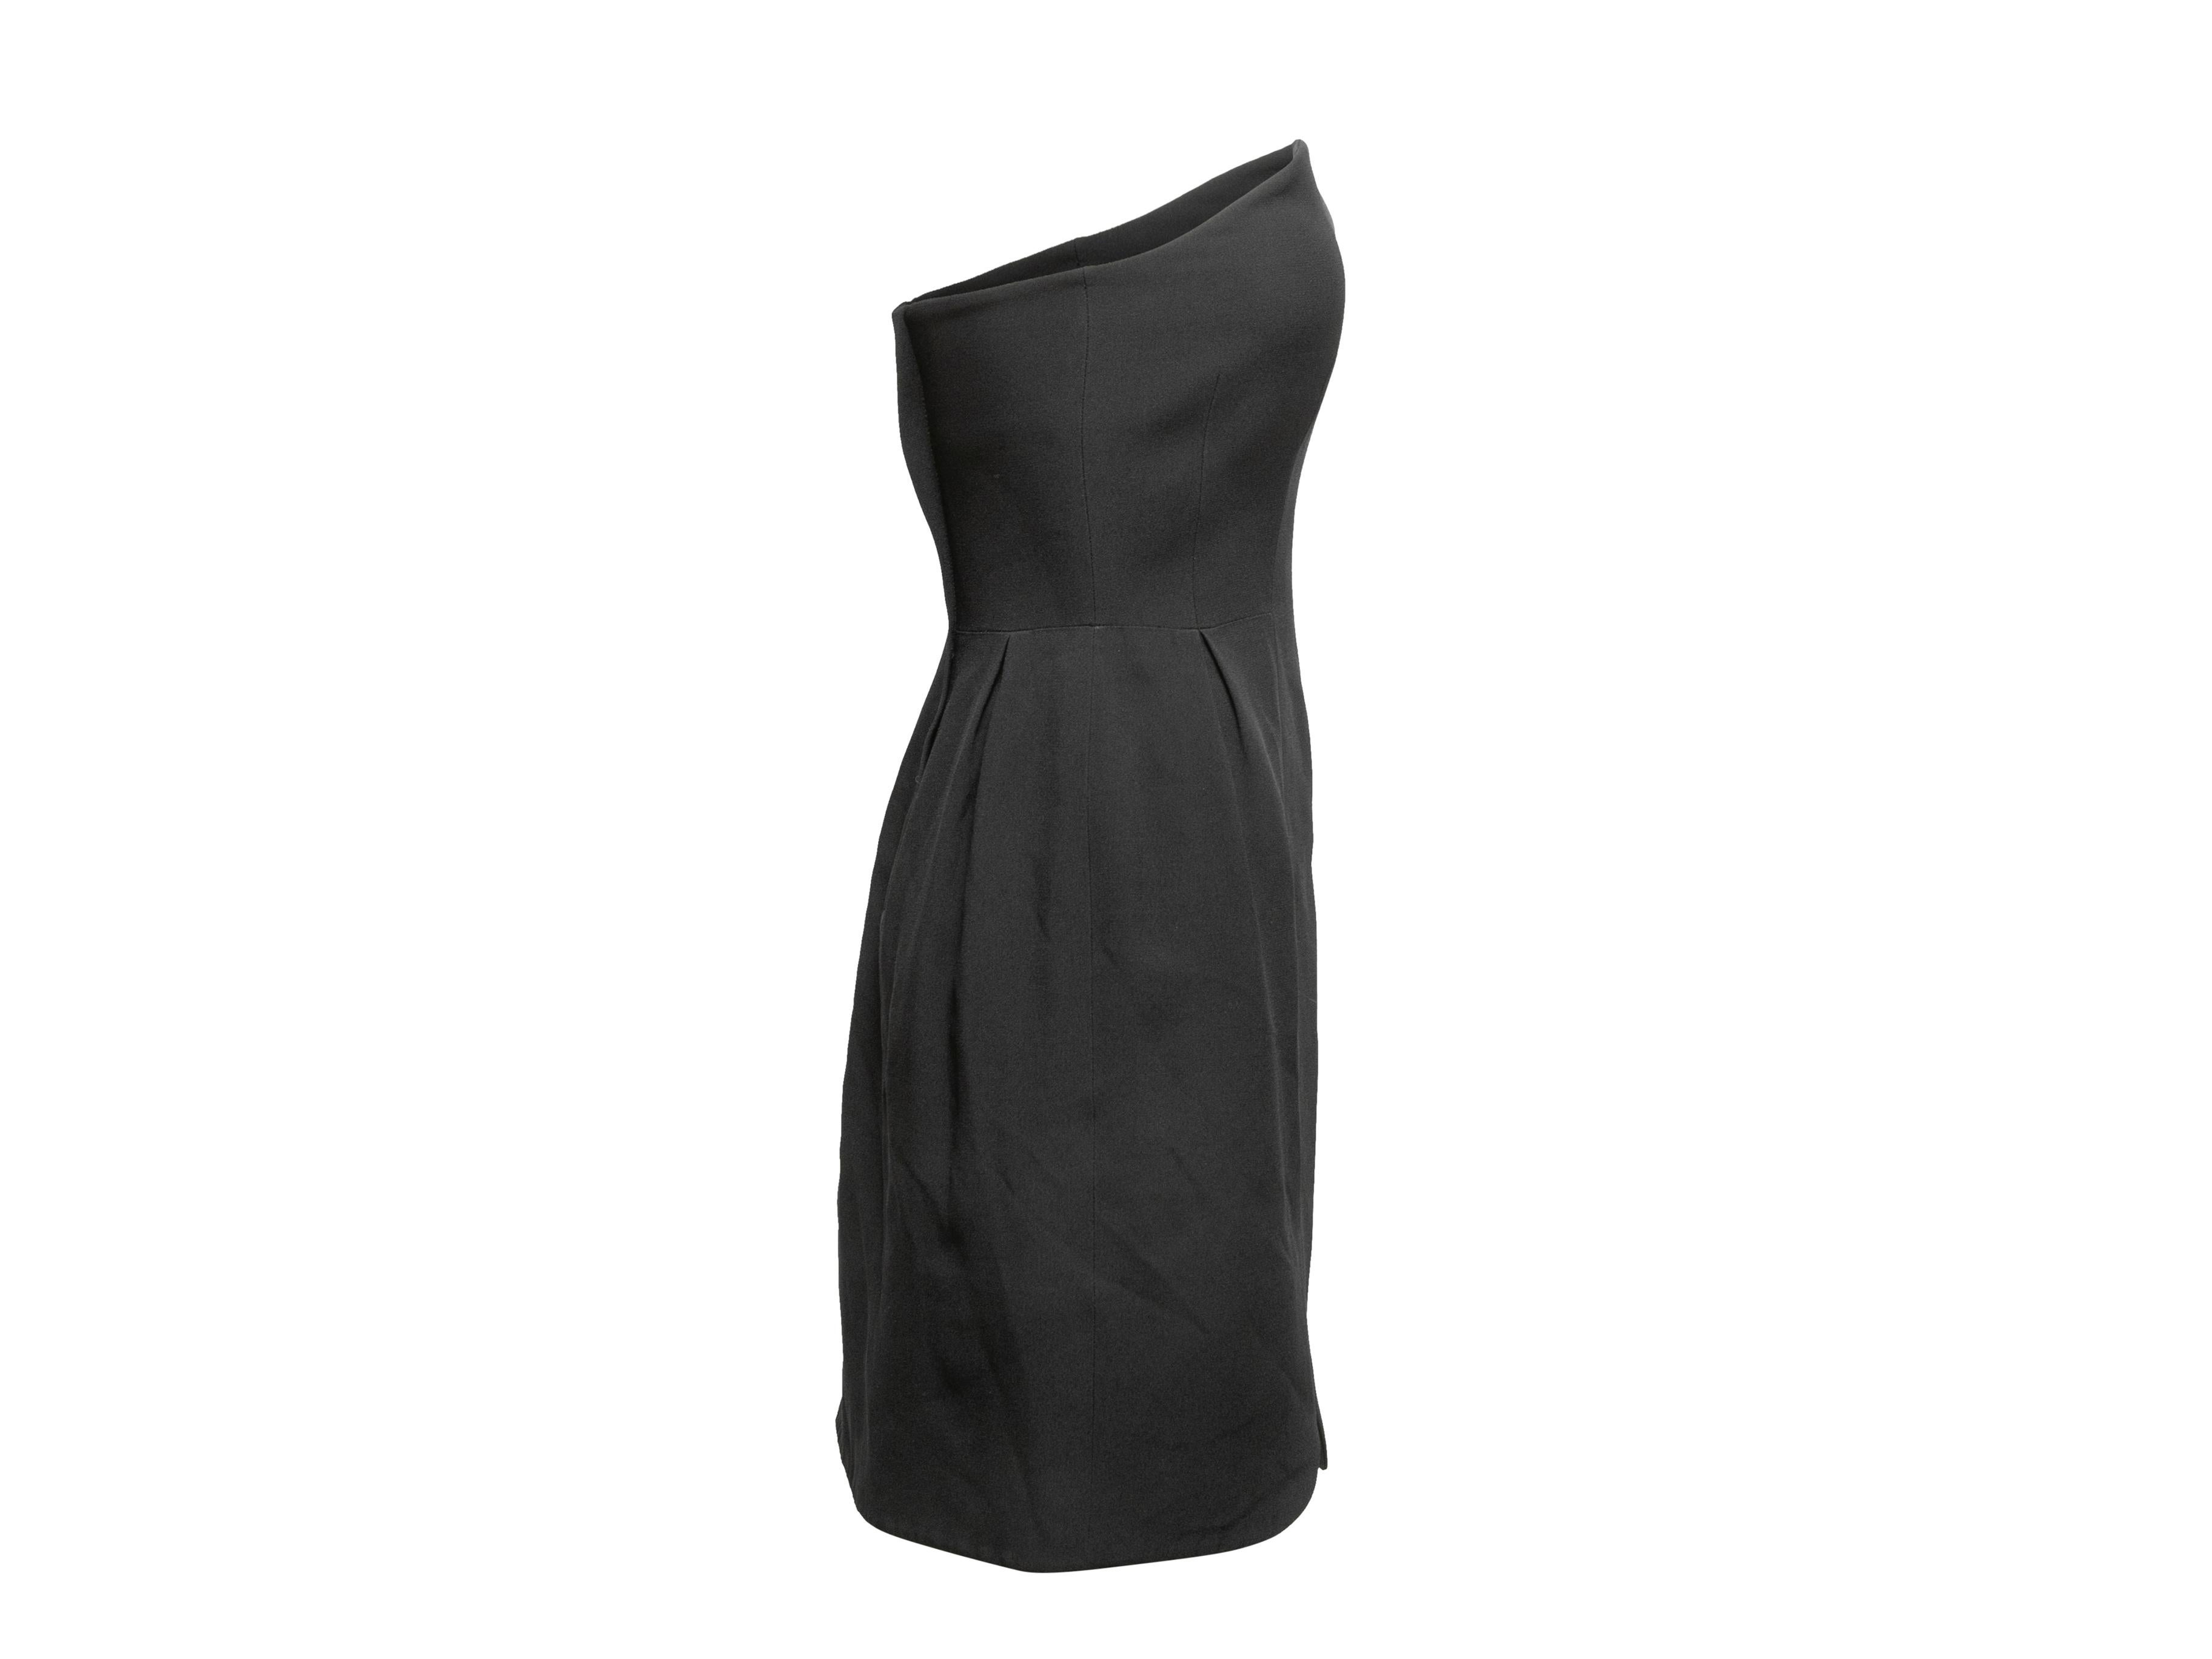 Black strapless mini dress by Miu Miu. Asymmetrical neckline. Back closures. 31